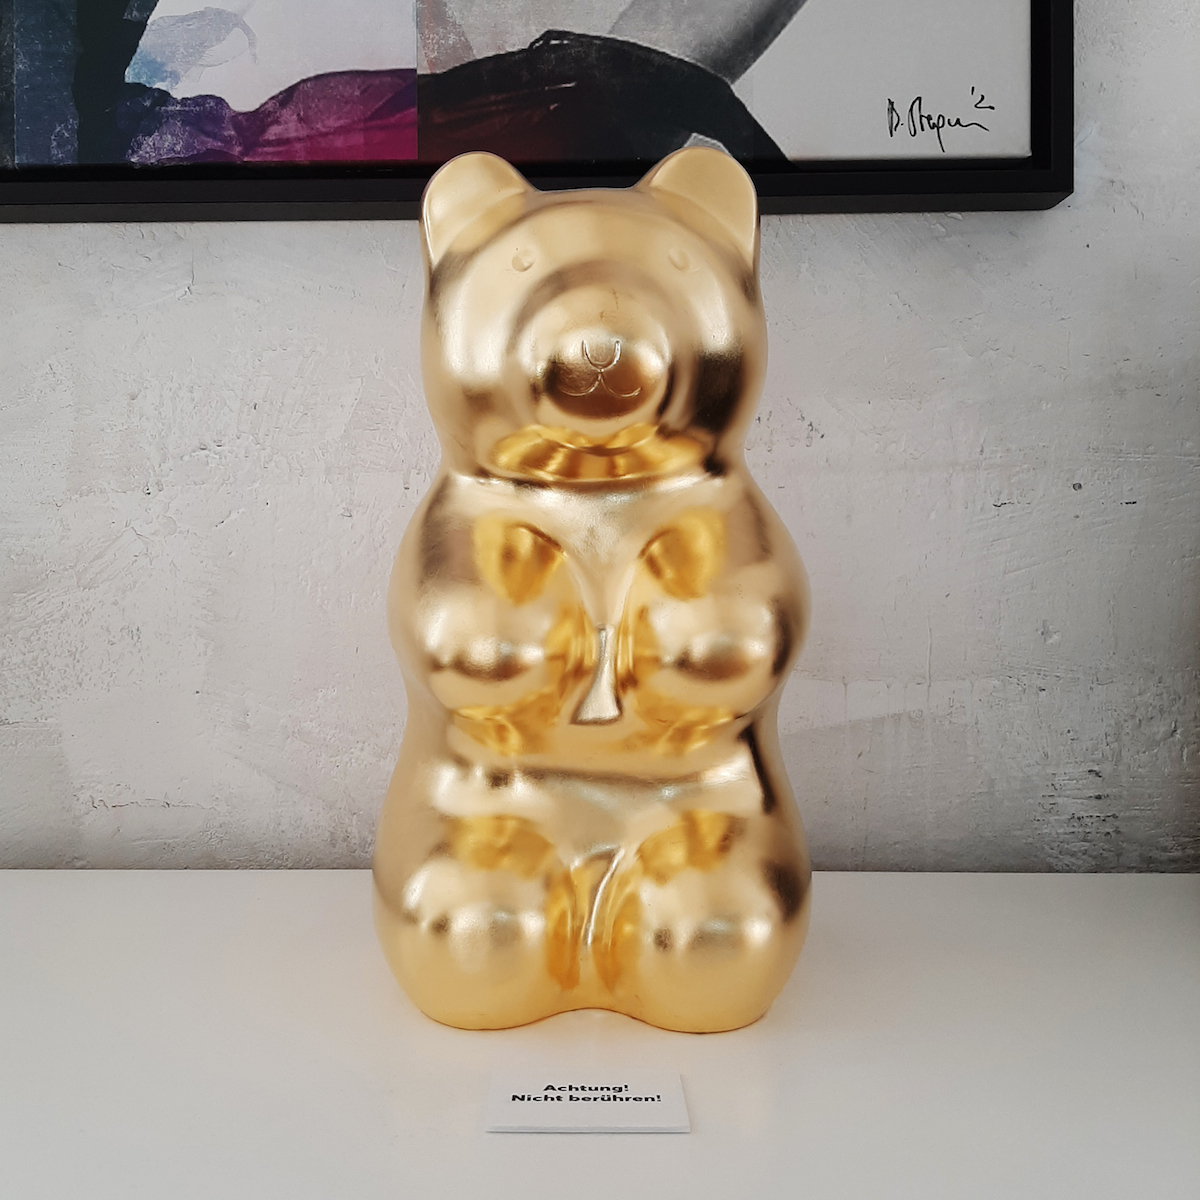 platik bär gold bär kunststoff figur art sculpture gold jellybear Jelly Pool Bear MANUEL W STEPAN - Contemporary Art Design - Pop Art Kunst - Pop Art Wien - Kunst Wien - Design Wien - Art Direktor Wien